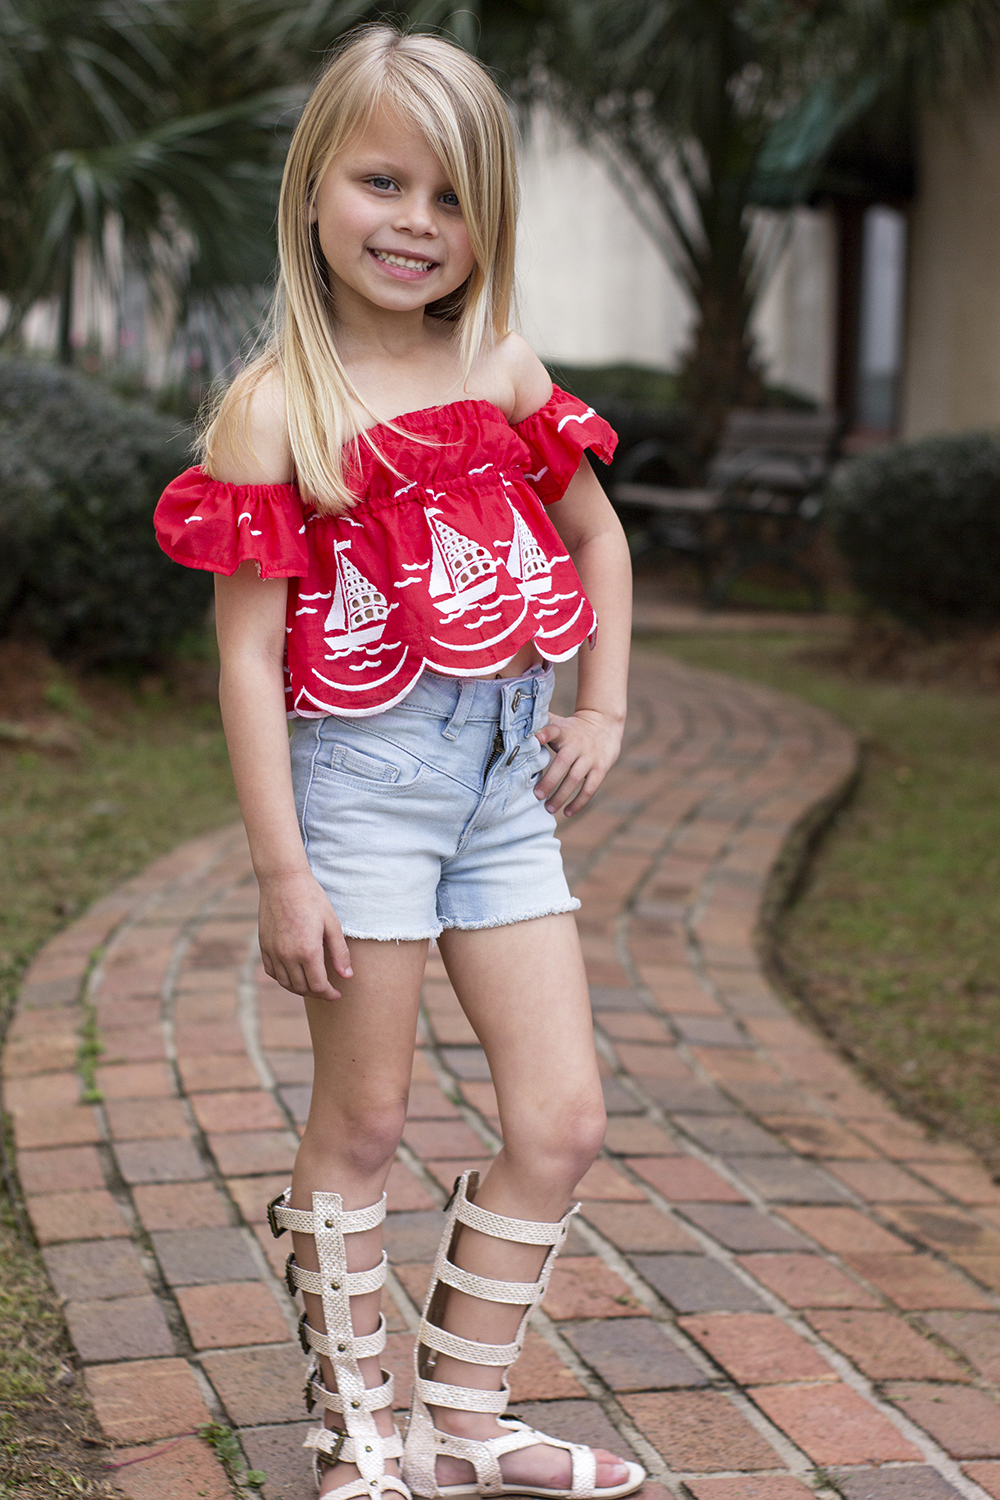 Fleur's Crop Top, Shirt, and Dress Sizes NB to 14 Kids PDF Pattern